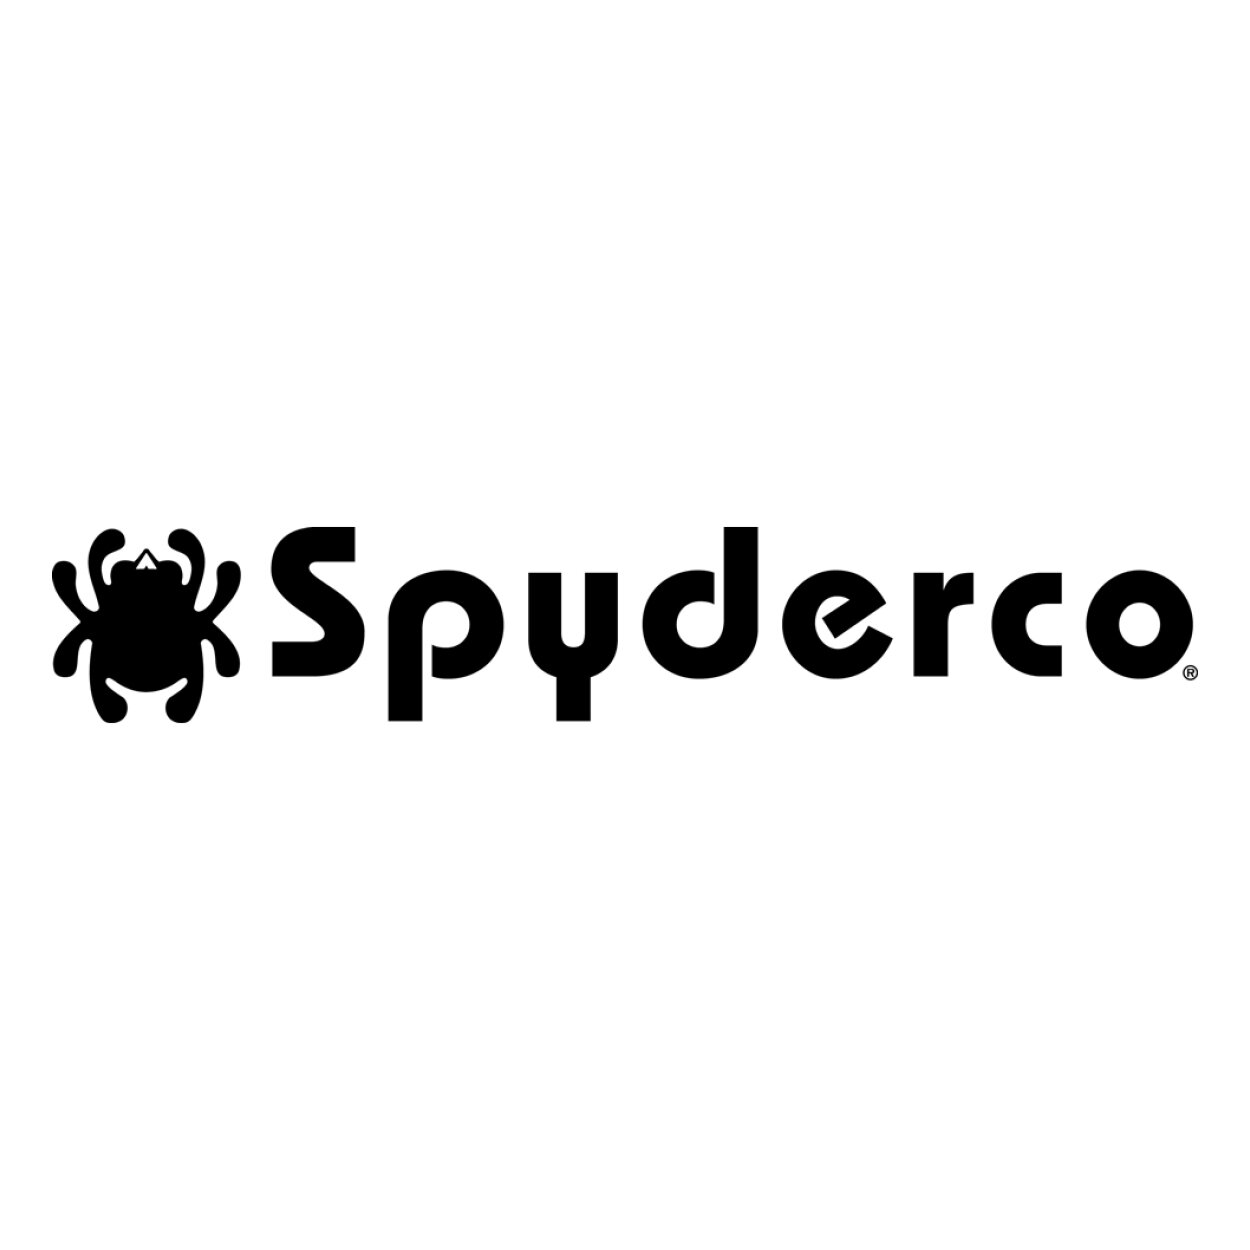 SpyderCo.jpg